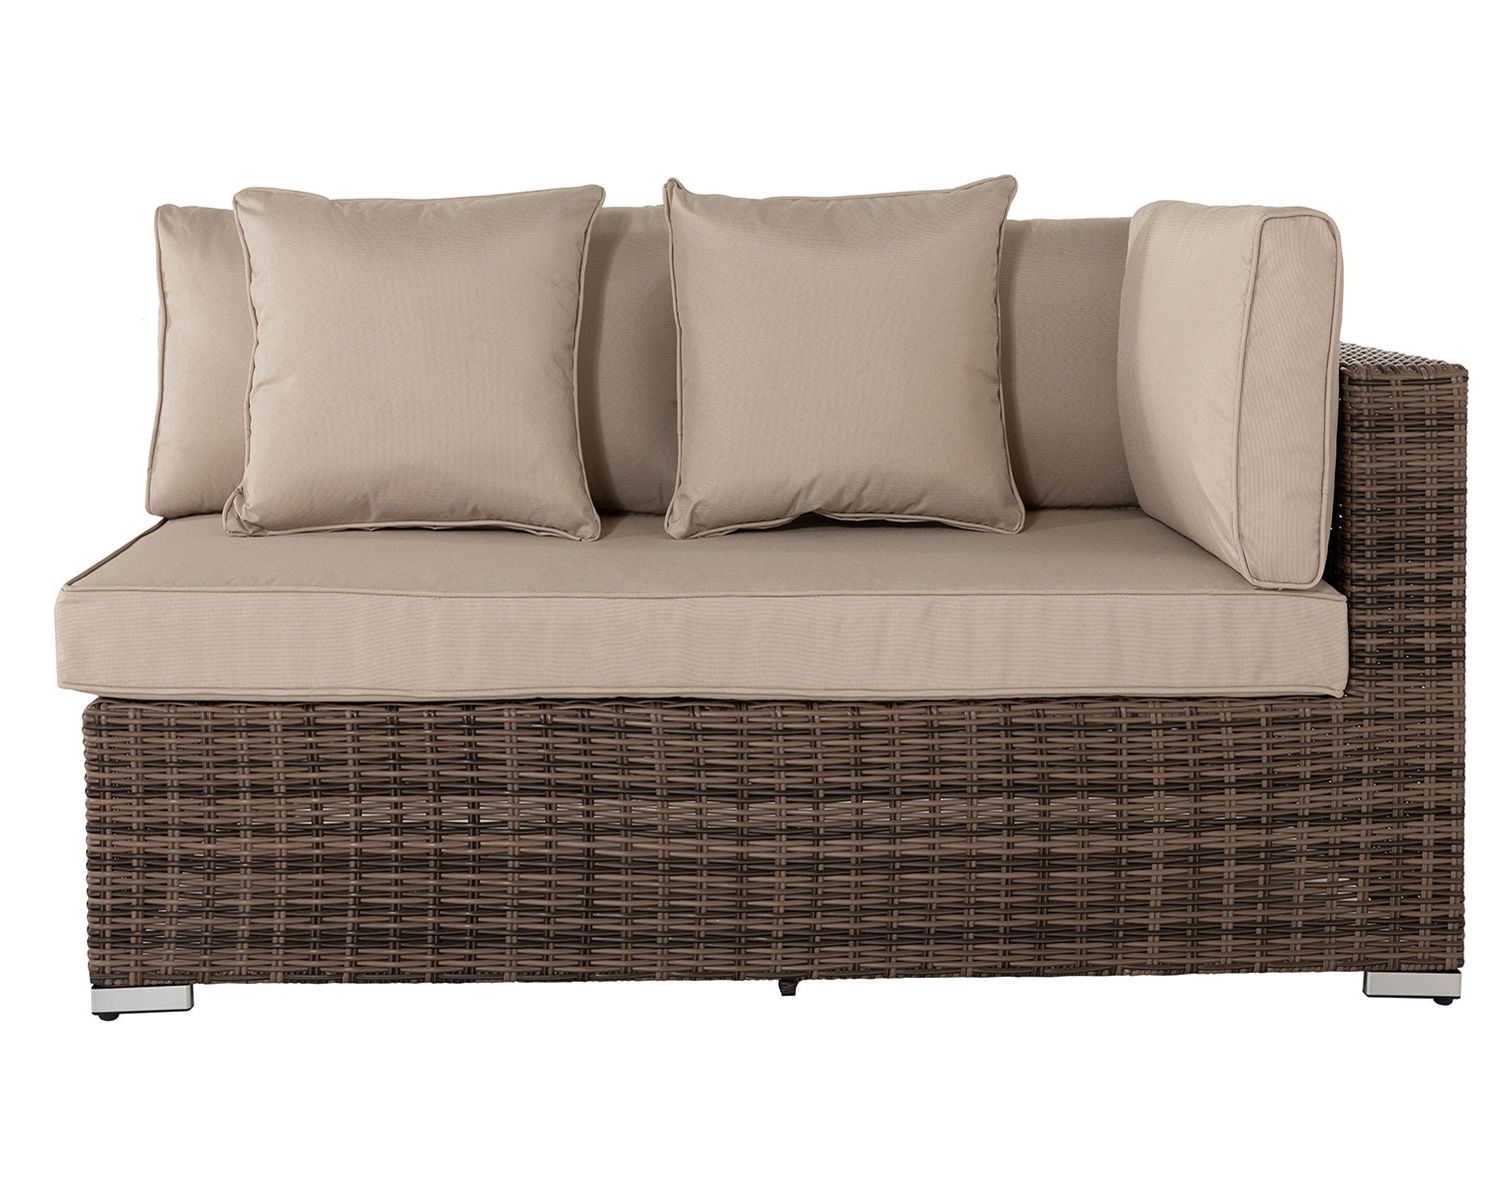 Rectangular Left As You Sit Rattan Garden Sofa in Premium Truffle Brown & Champagne - Premium Weave